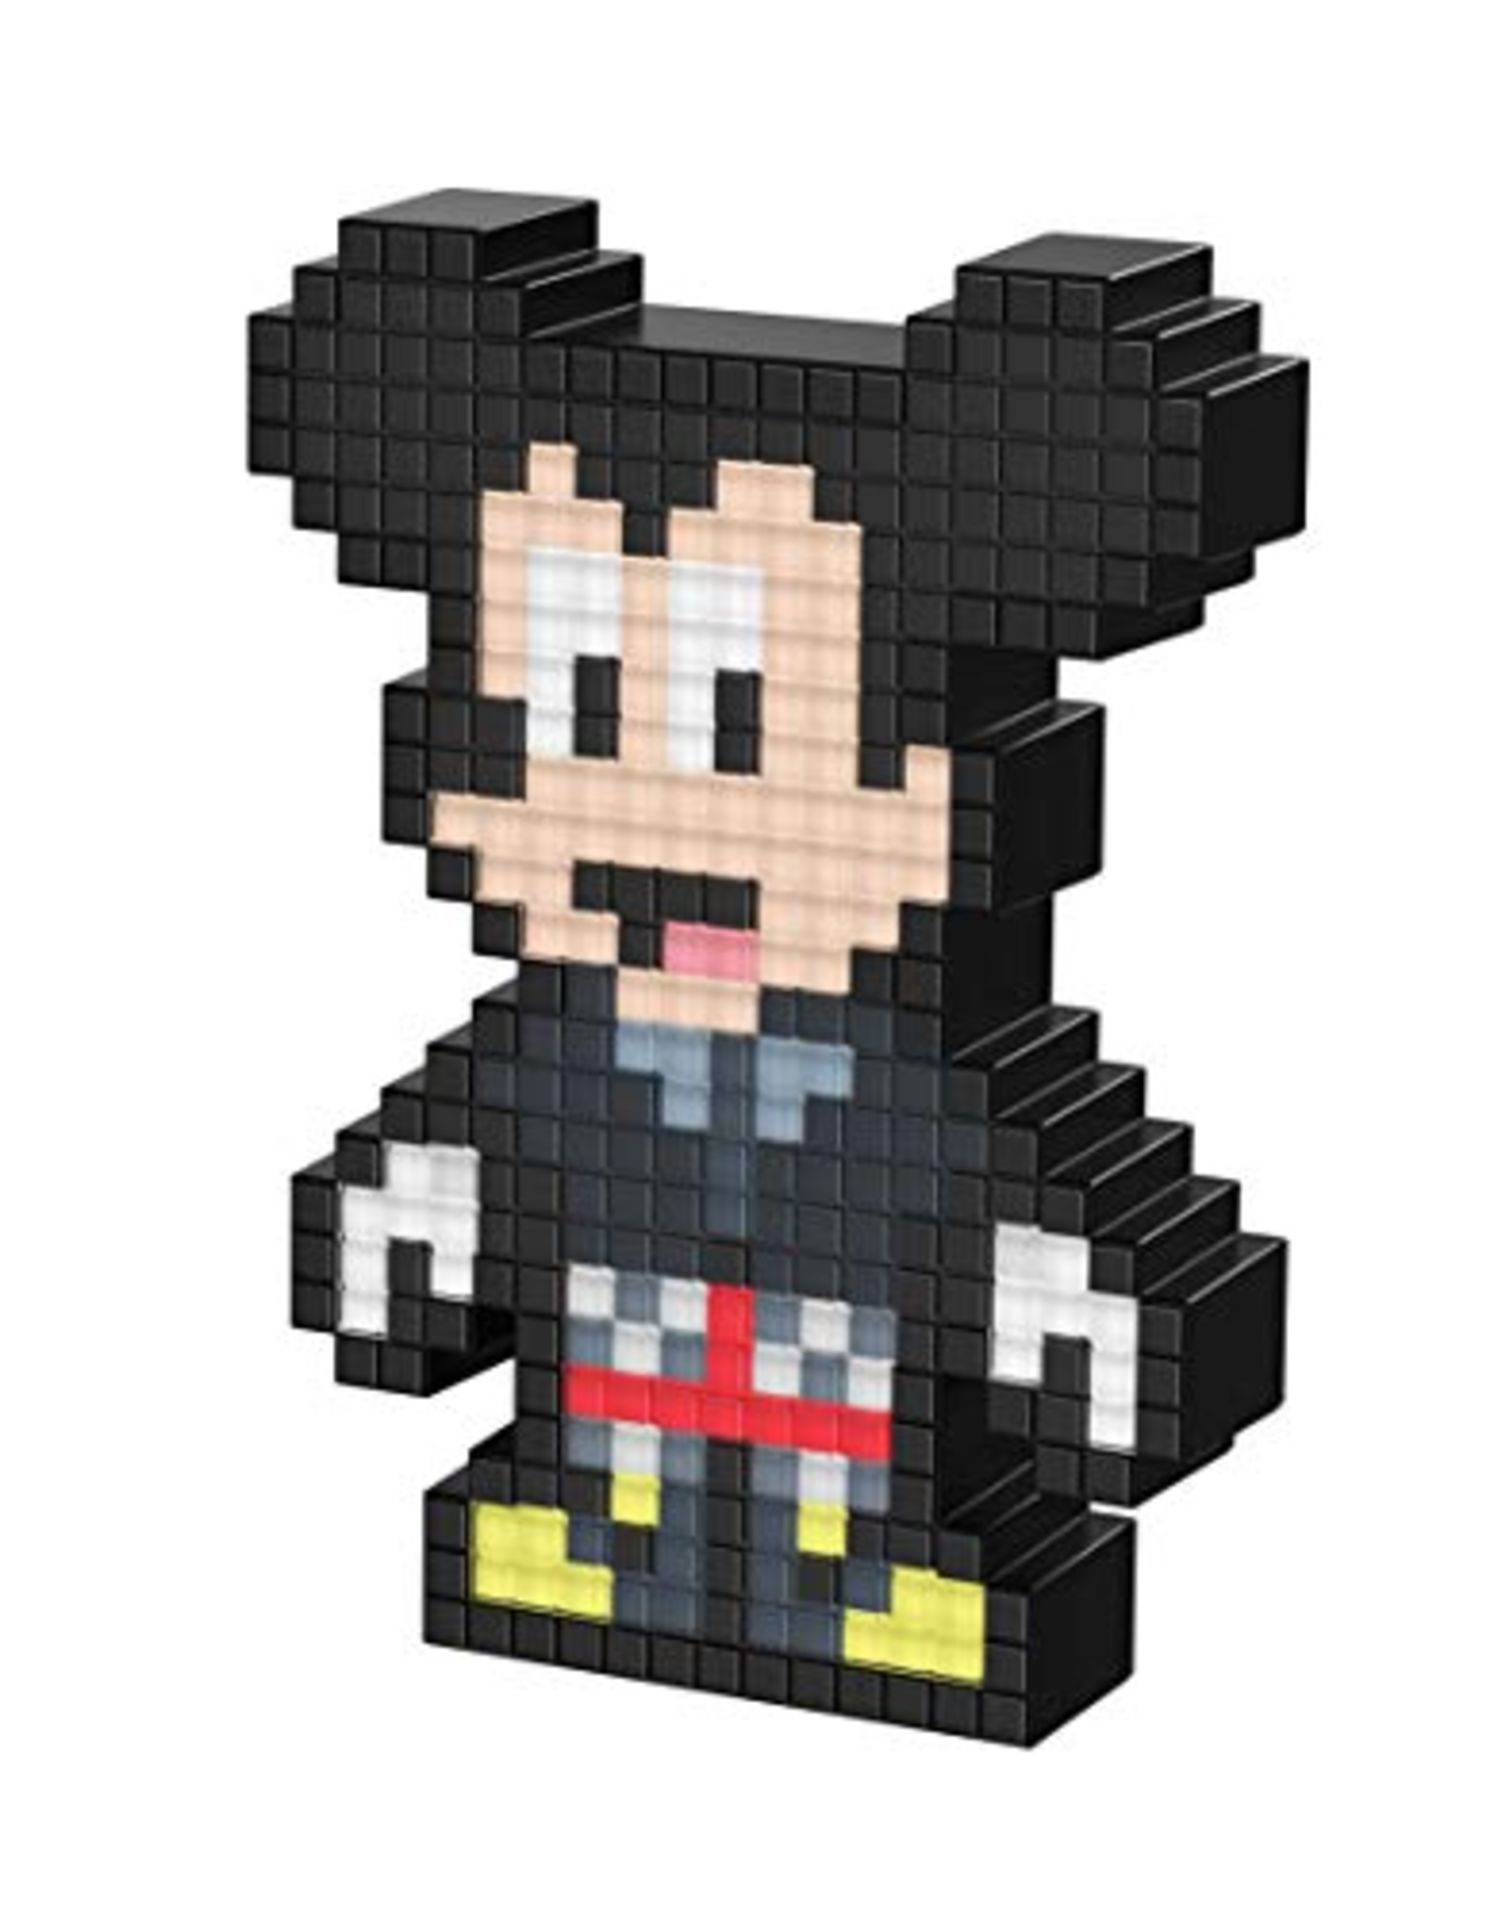 RRP £13.69 Pixel Pals - Kingdom Hearts - King Mickey (Nintendo Switch)